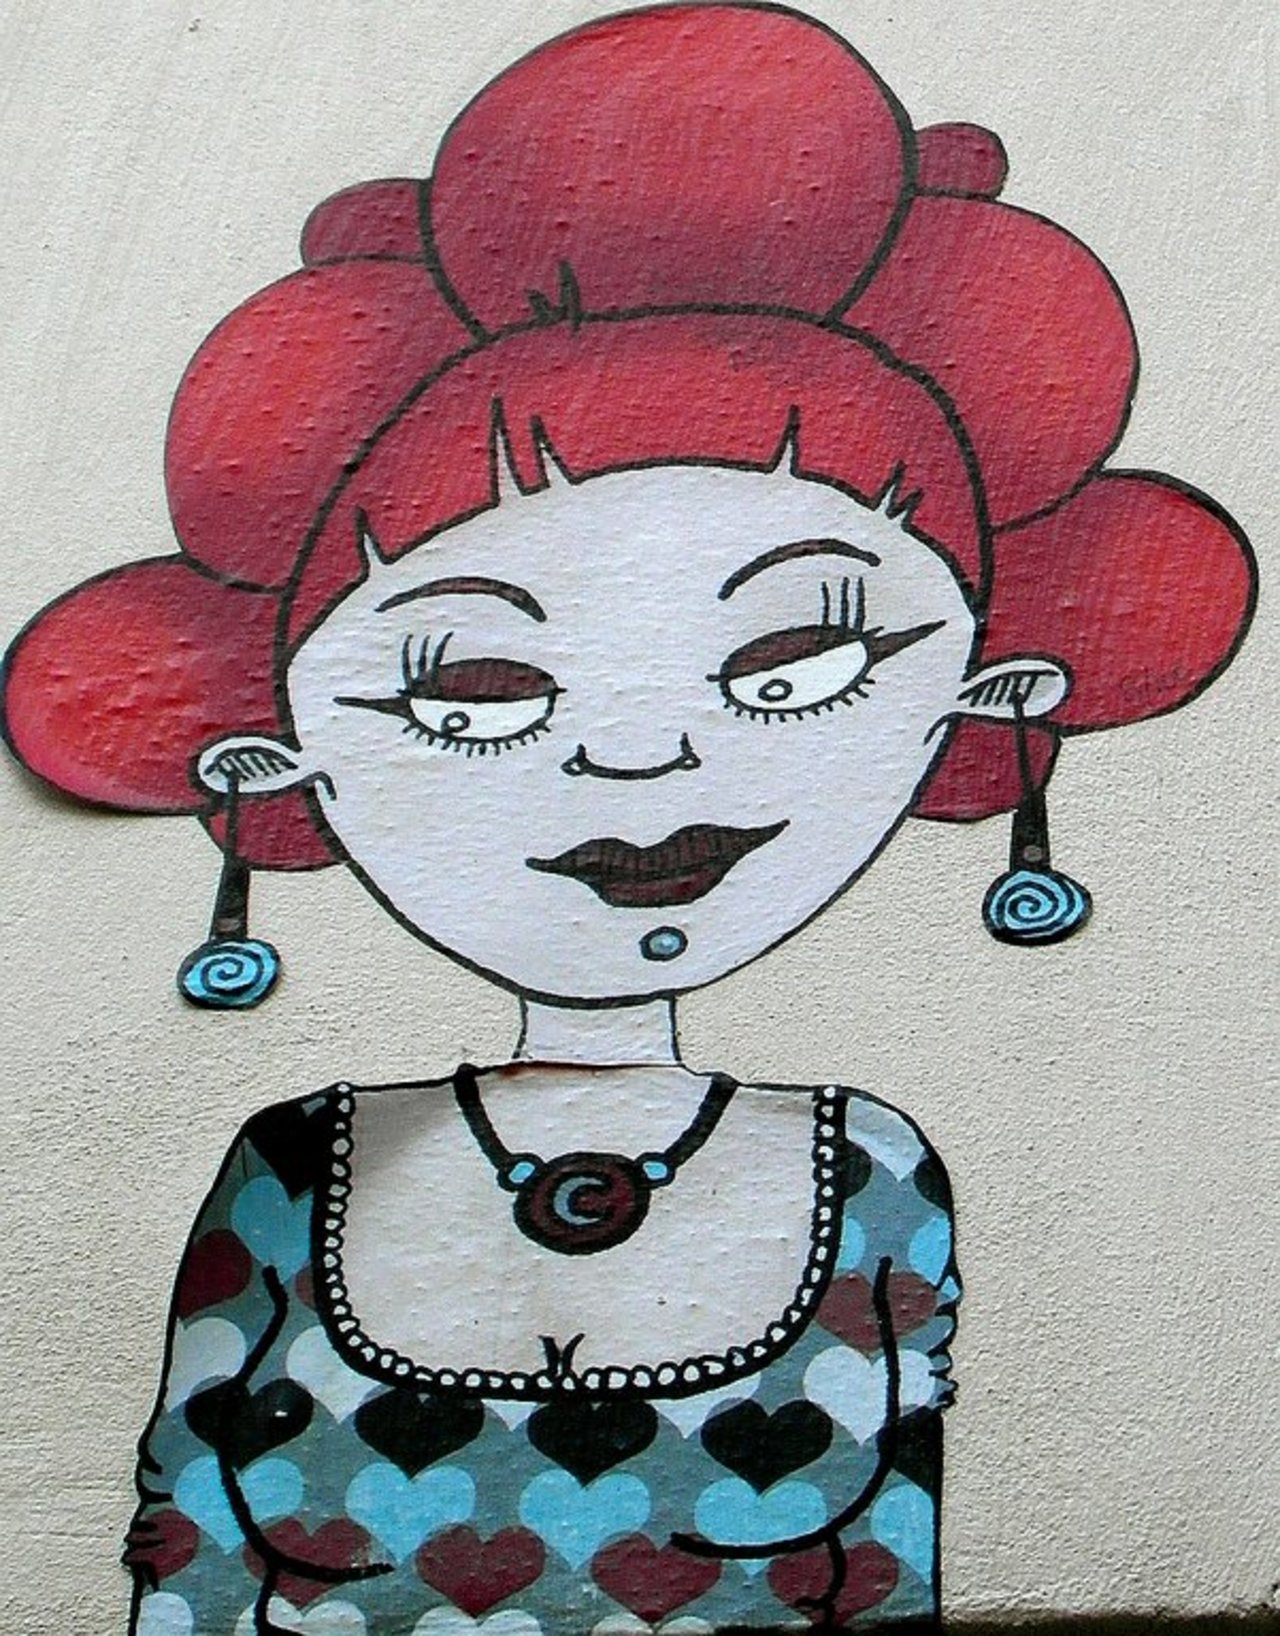 RT @urbacolors: Street Art by anonymous in #Paris http://www.urbacolors.com #art #mural #graffiti #streetart https://t.co/KQ4TyCT8se